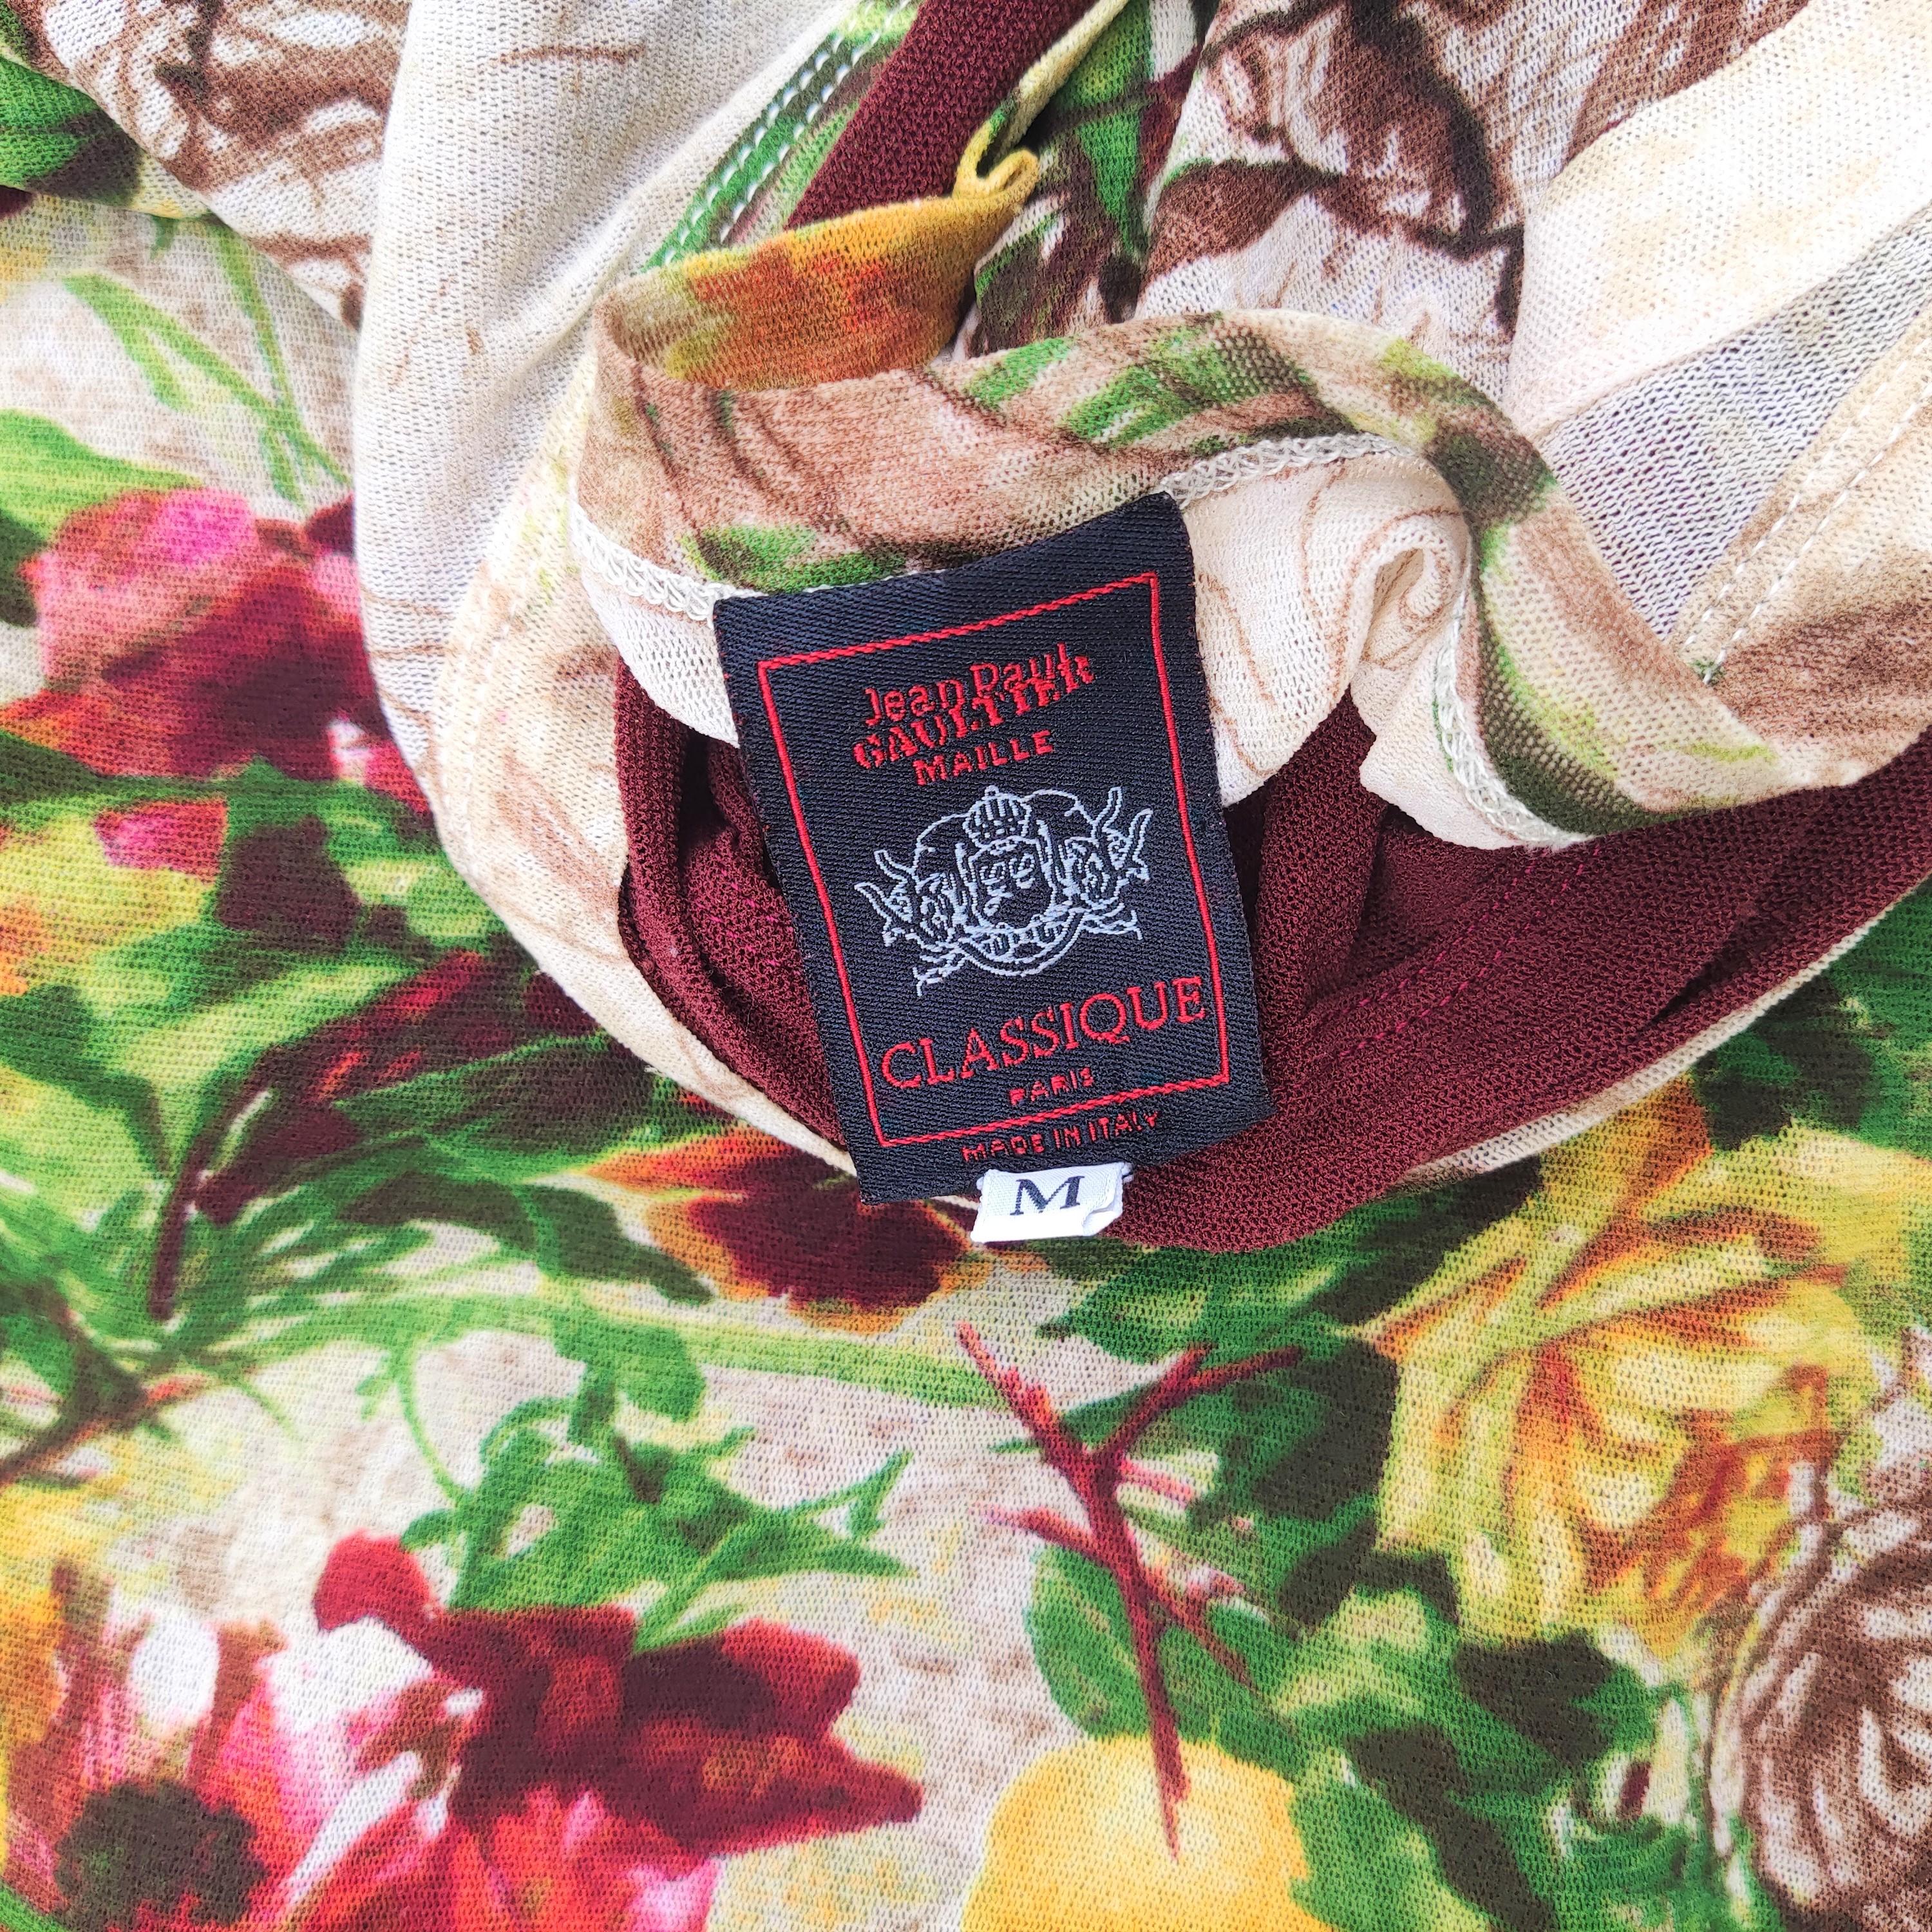 Jean Paul Gaultier Mesh Floral Rose Roses Vintage Transparent 2 Piece 1999 Dress 7